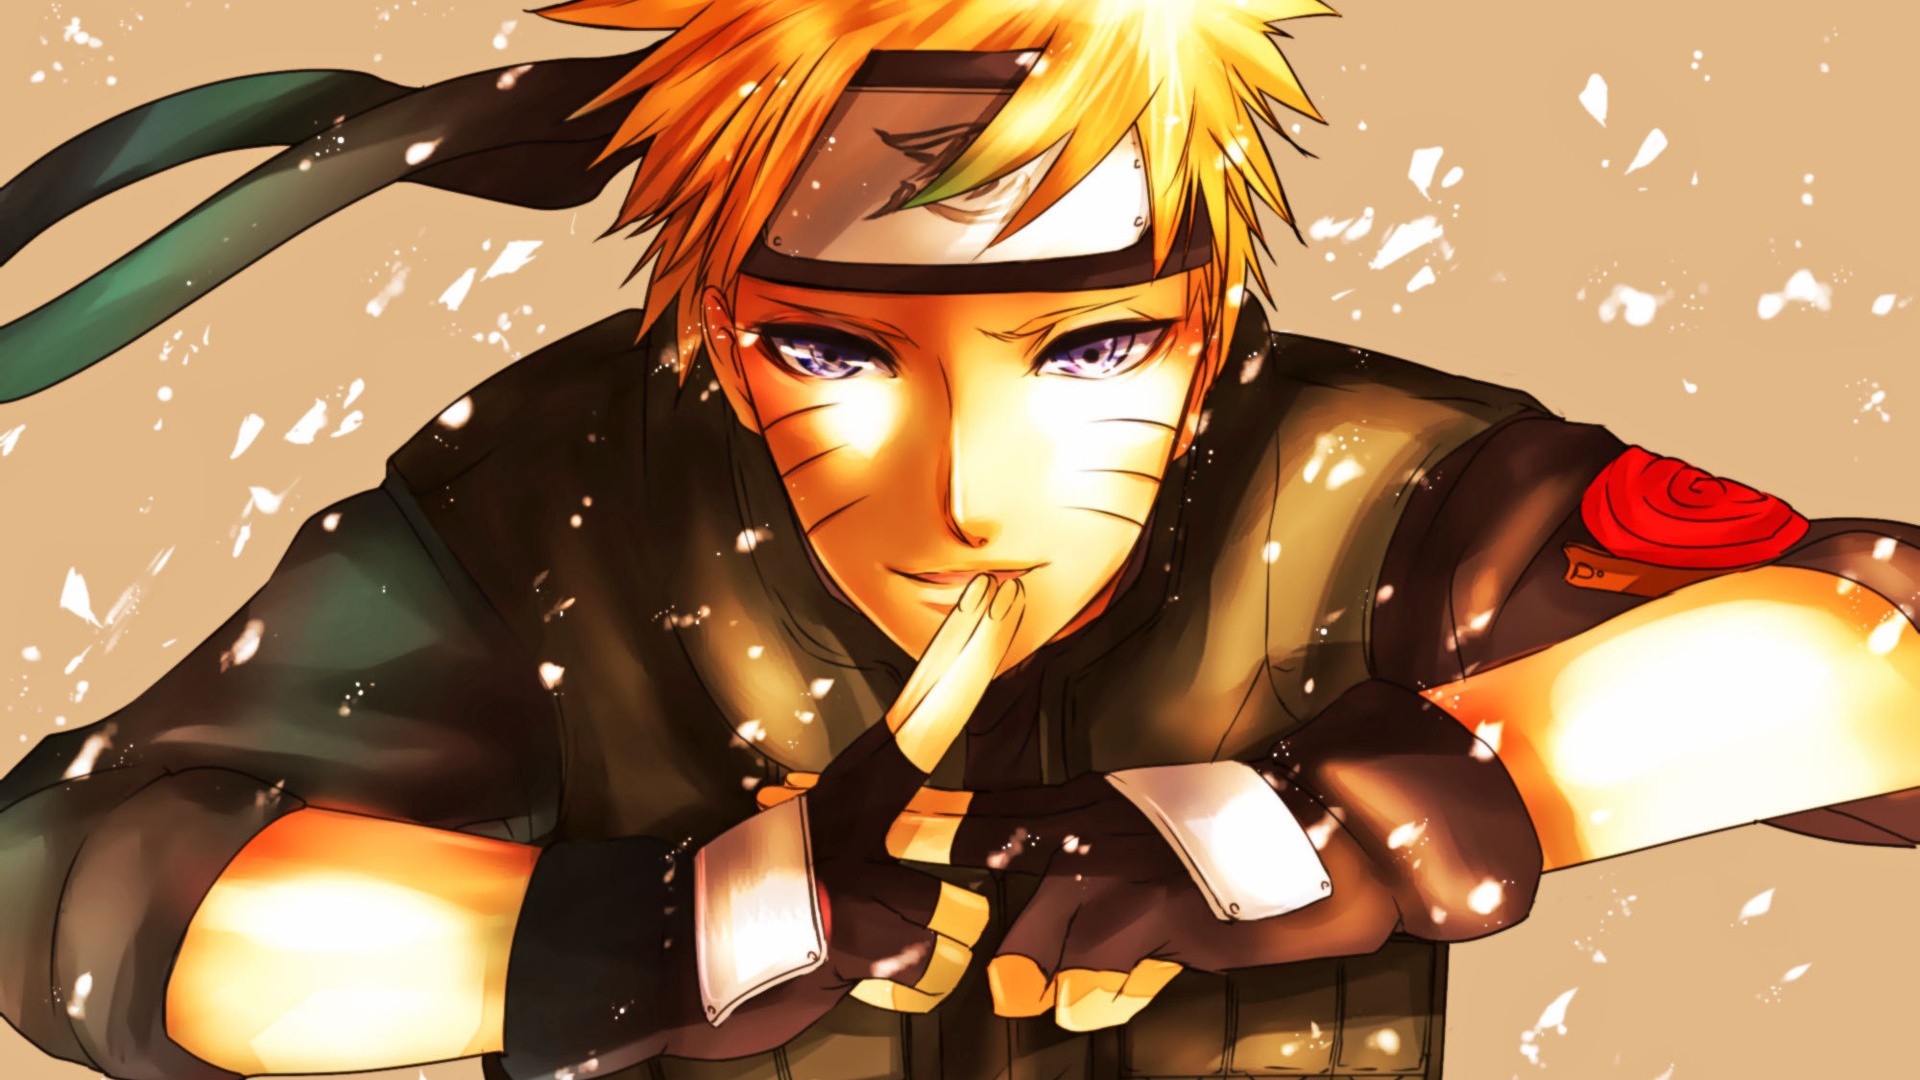 Naruto: Shippuden, anime, headbands, anime boys, Uzumaki Naruto - desktop wallpaper